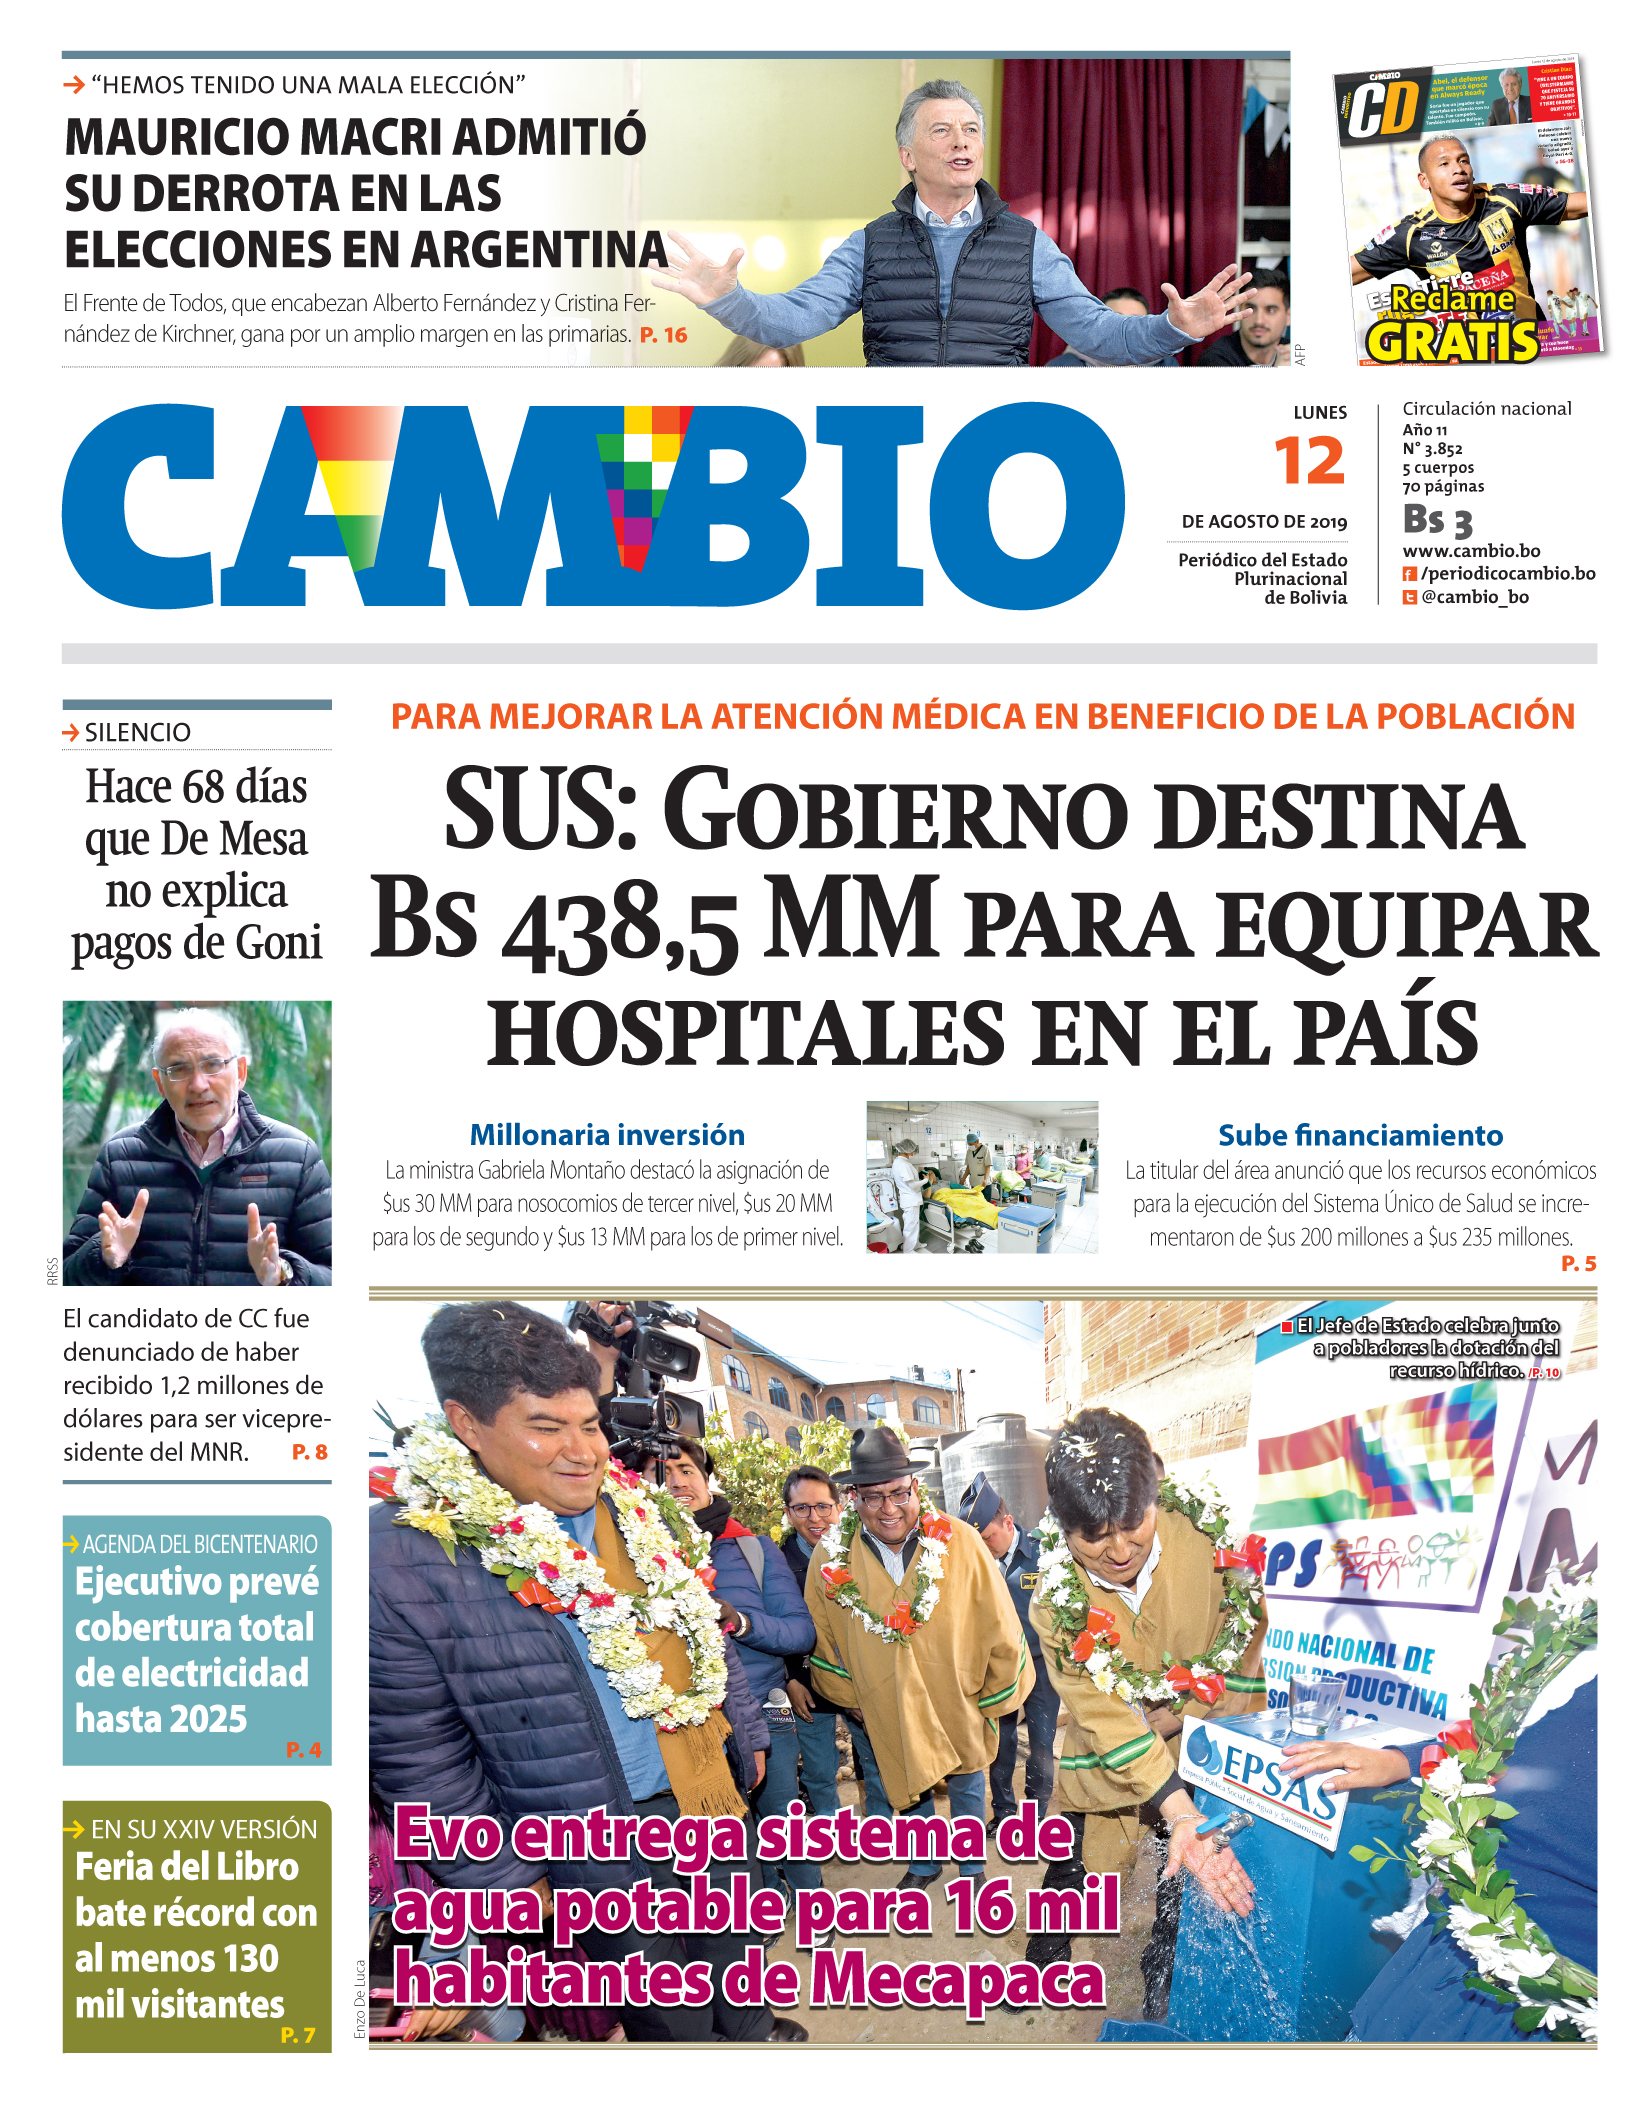 Portadas de periódicos de Bolivia del lunes 12 de agosto de 2019 eju.tv